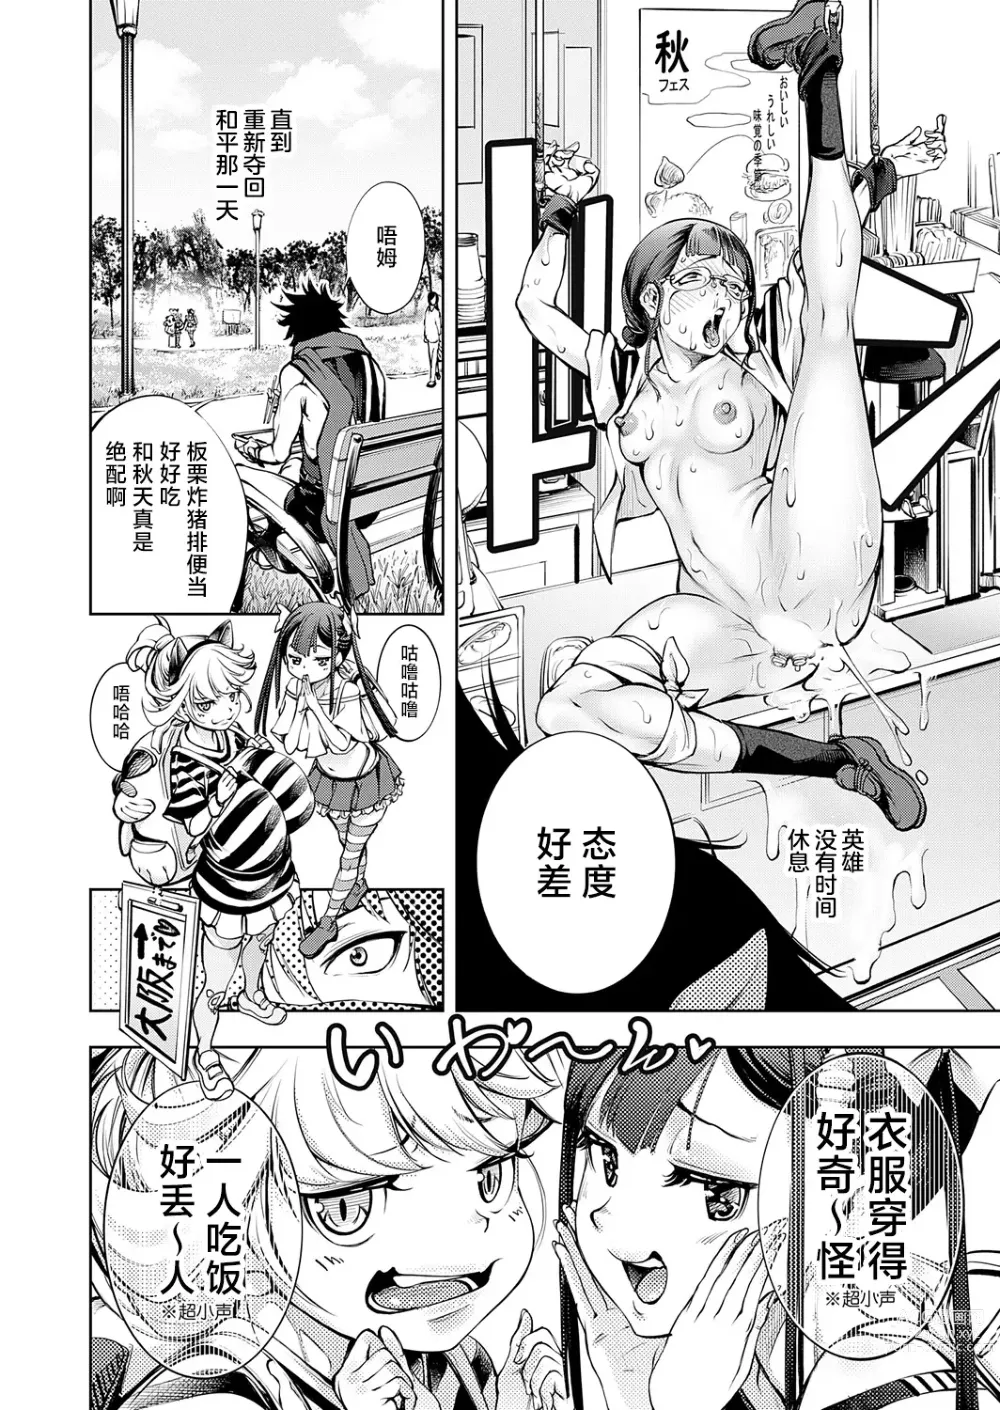 Page 14 of manga The Time ~Ore Monogatari~